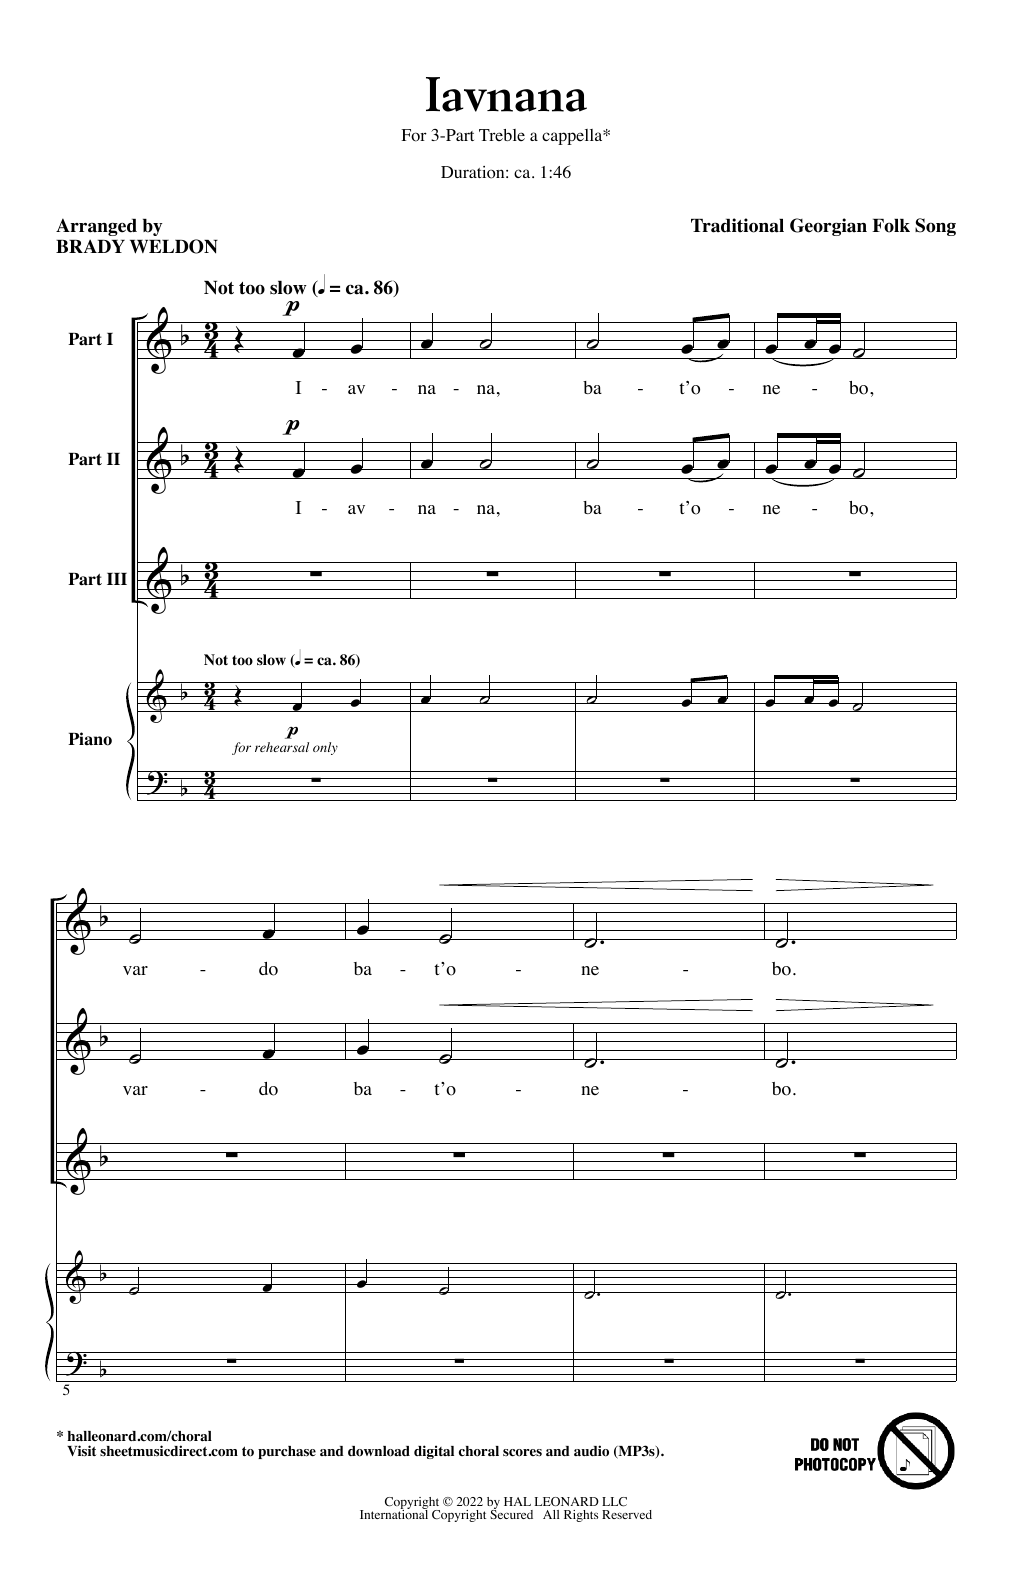 Download Traditional Georgian Folk Song Iavnana (arr. Brady Weldon) Sheet Music